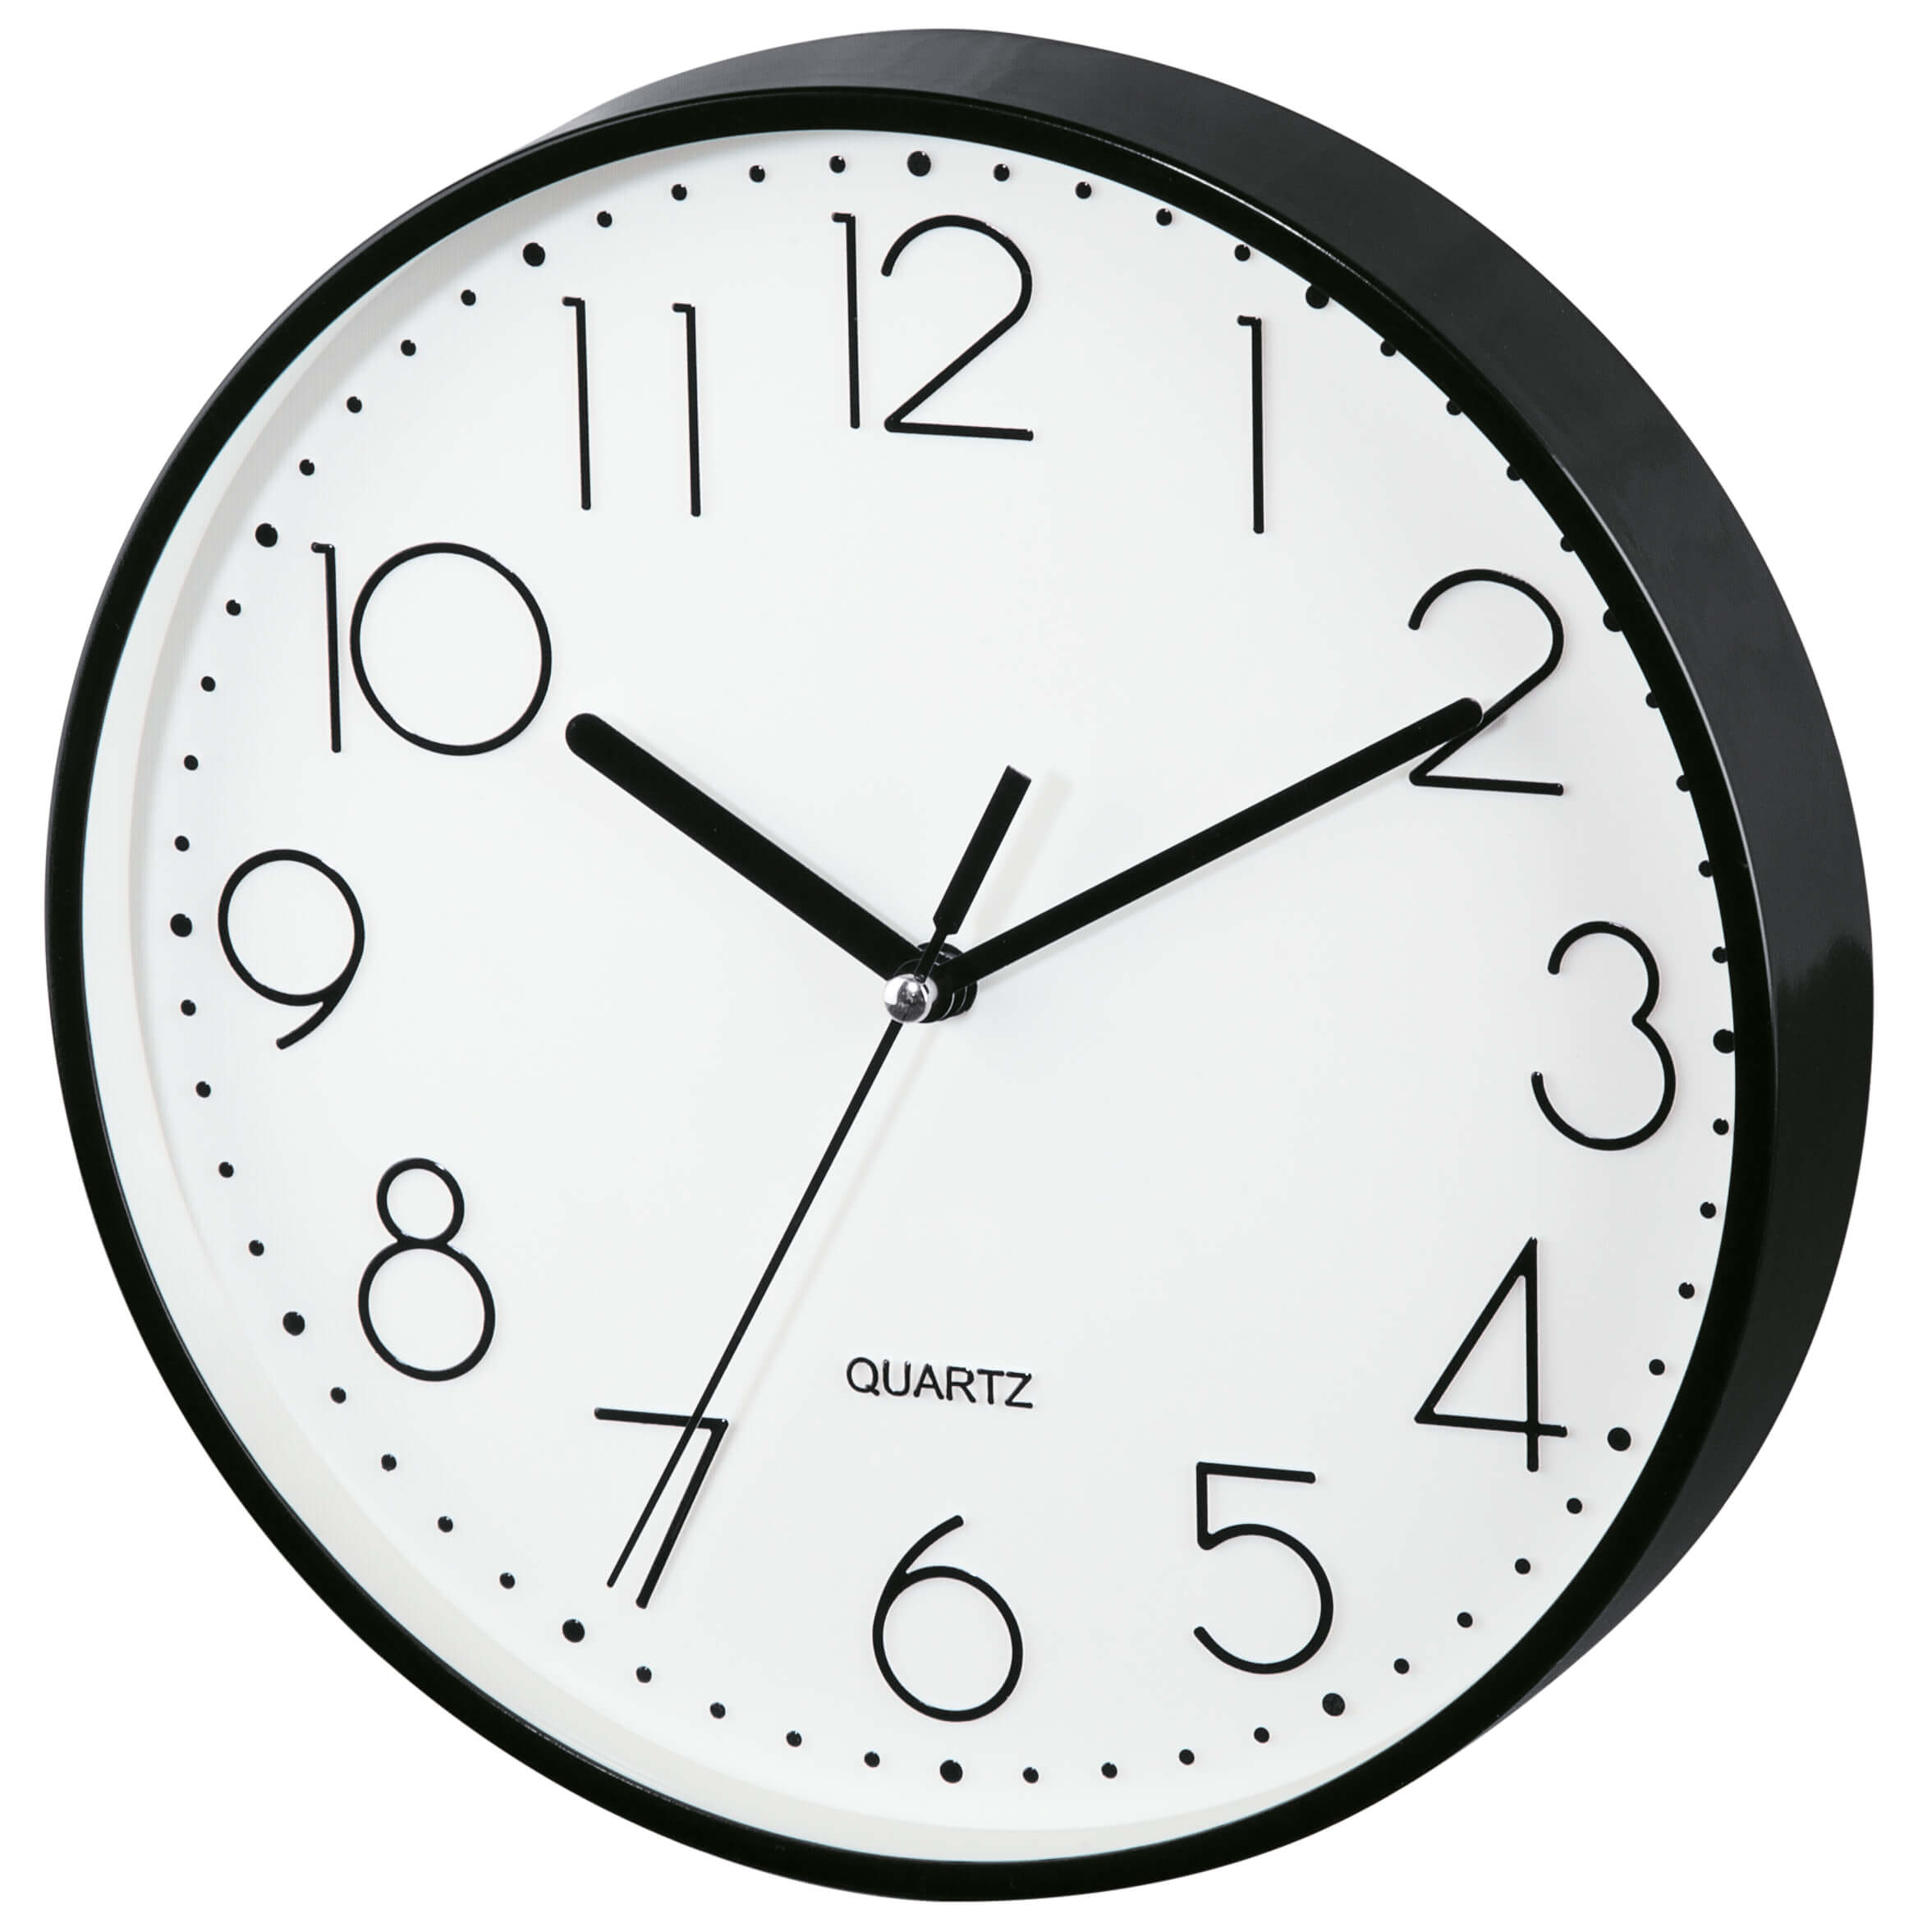 HAMA Wall Clock PG-220 Black